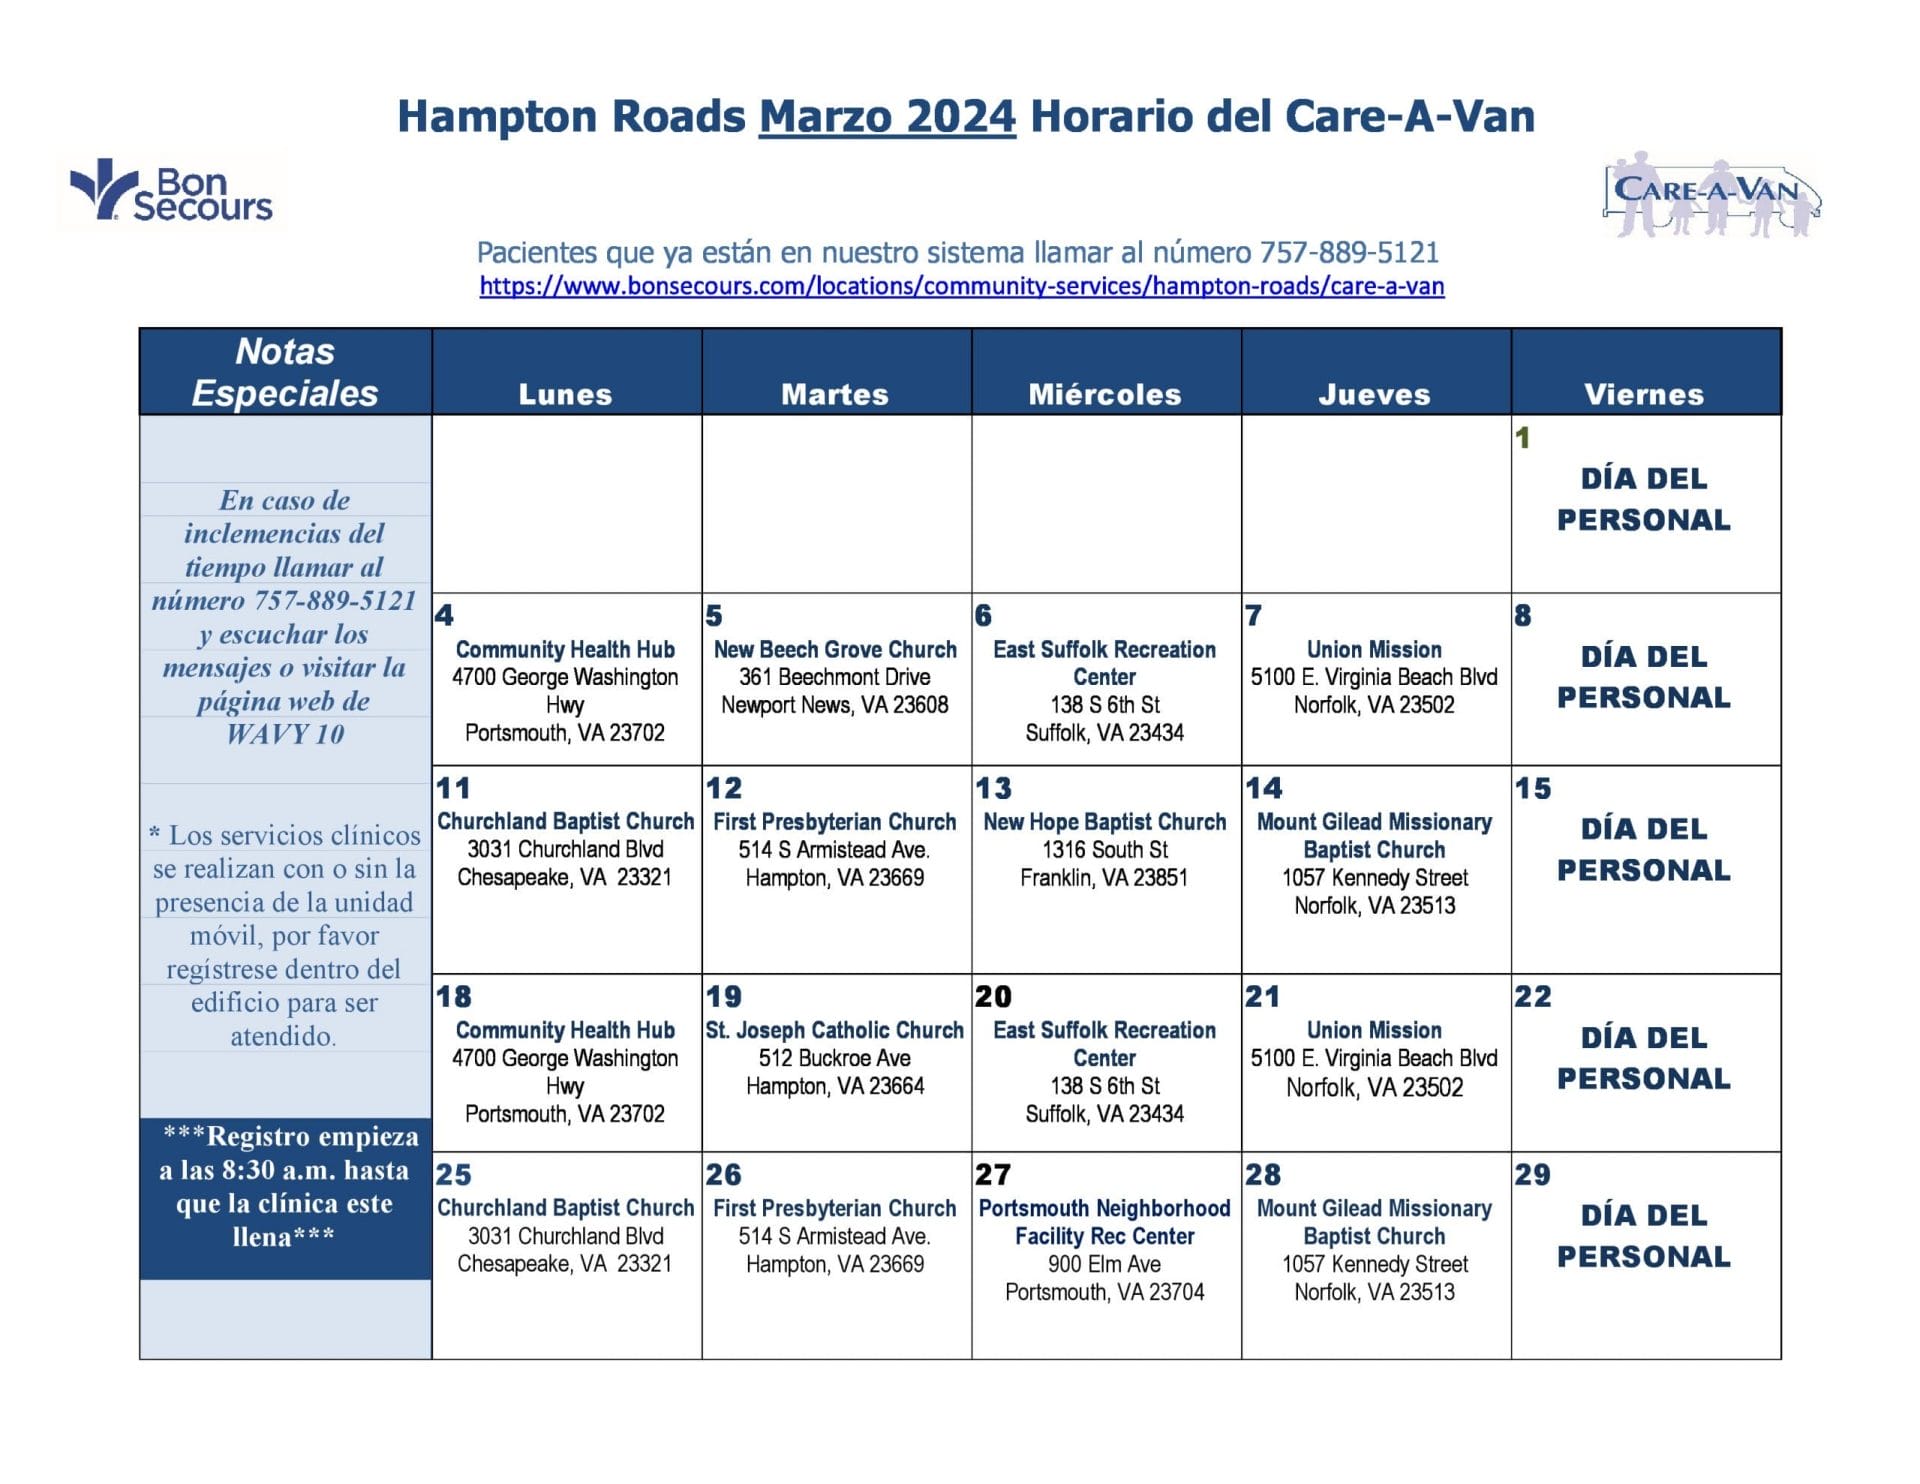 Hampton Roads Care A Van Spanish calendar Marzo 2024